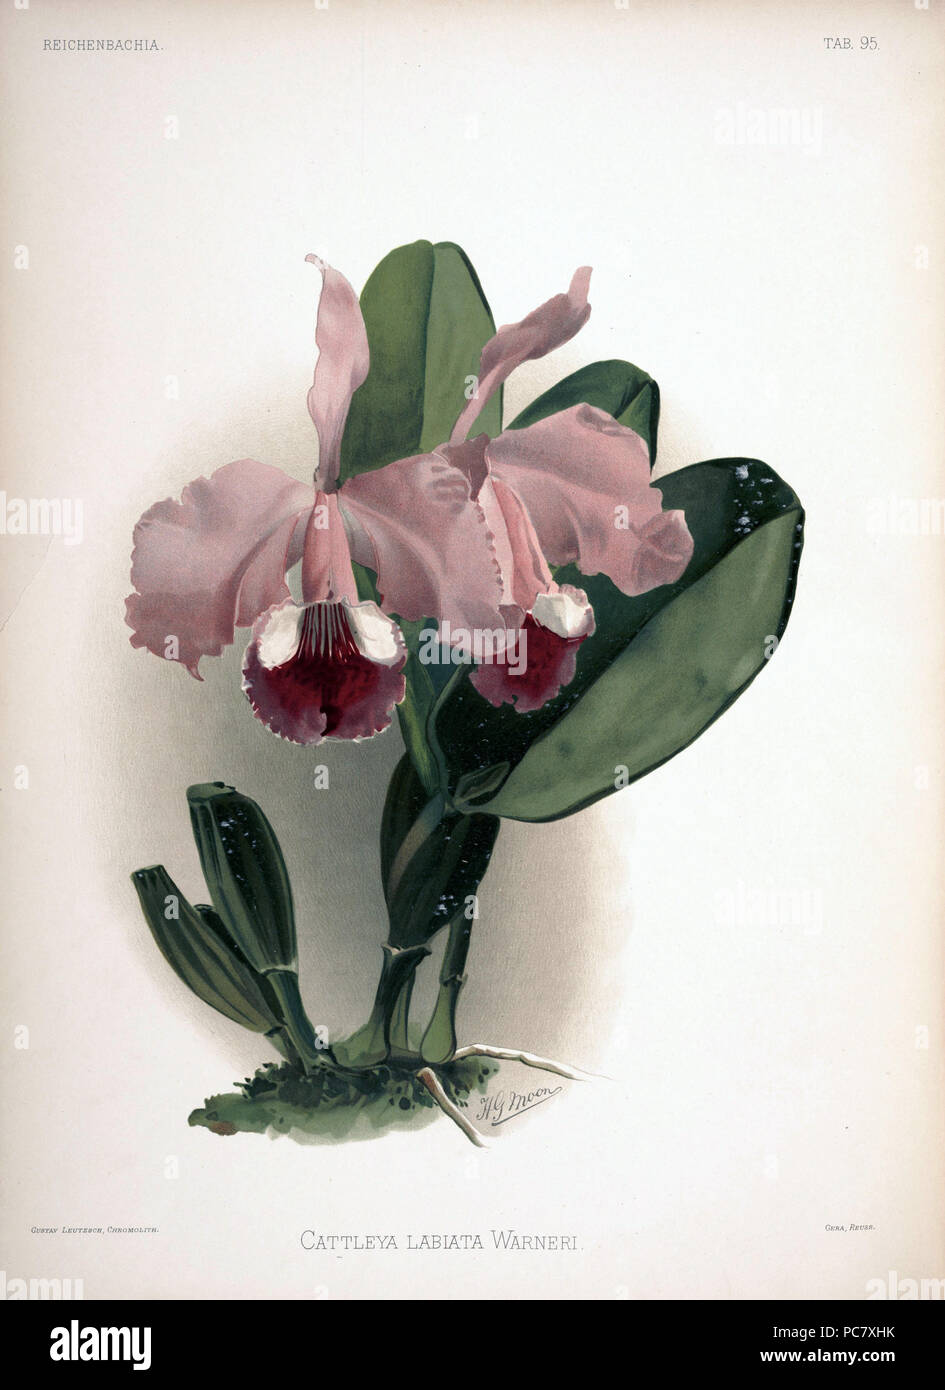 220 Frederick Sander - Reichenbachia II plate 95 (1890) - Cattleya labiata warneri Stock Photo